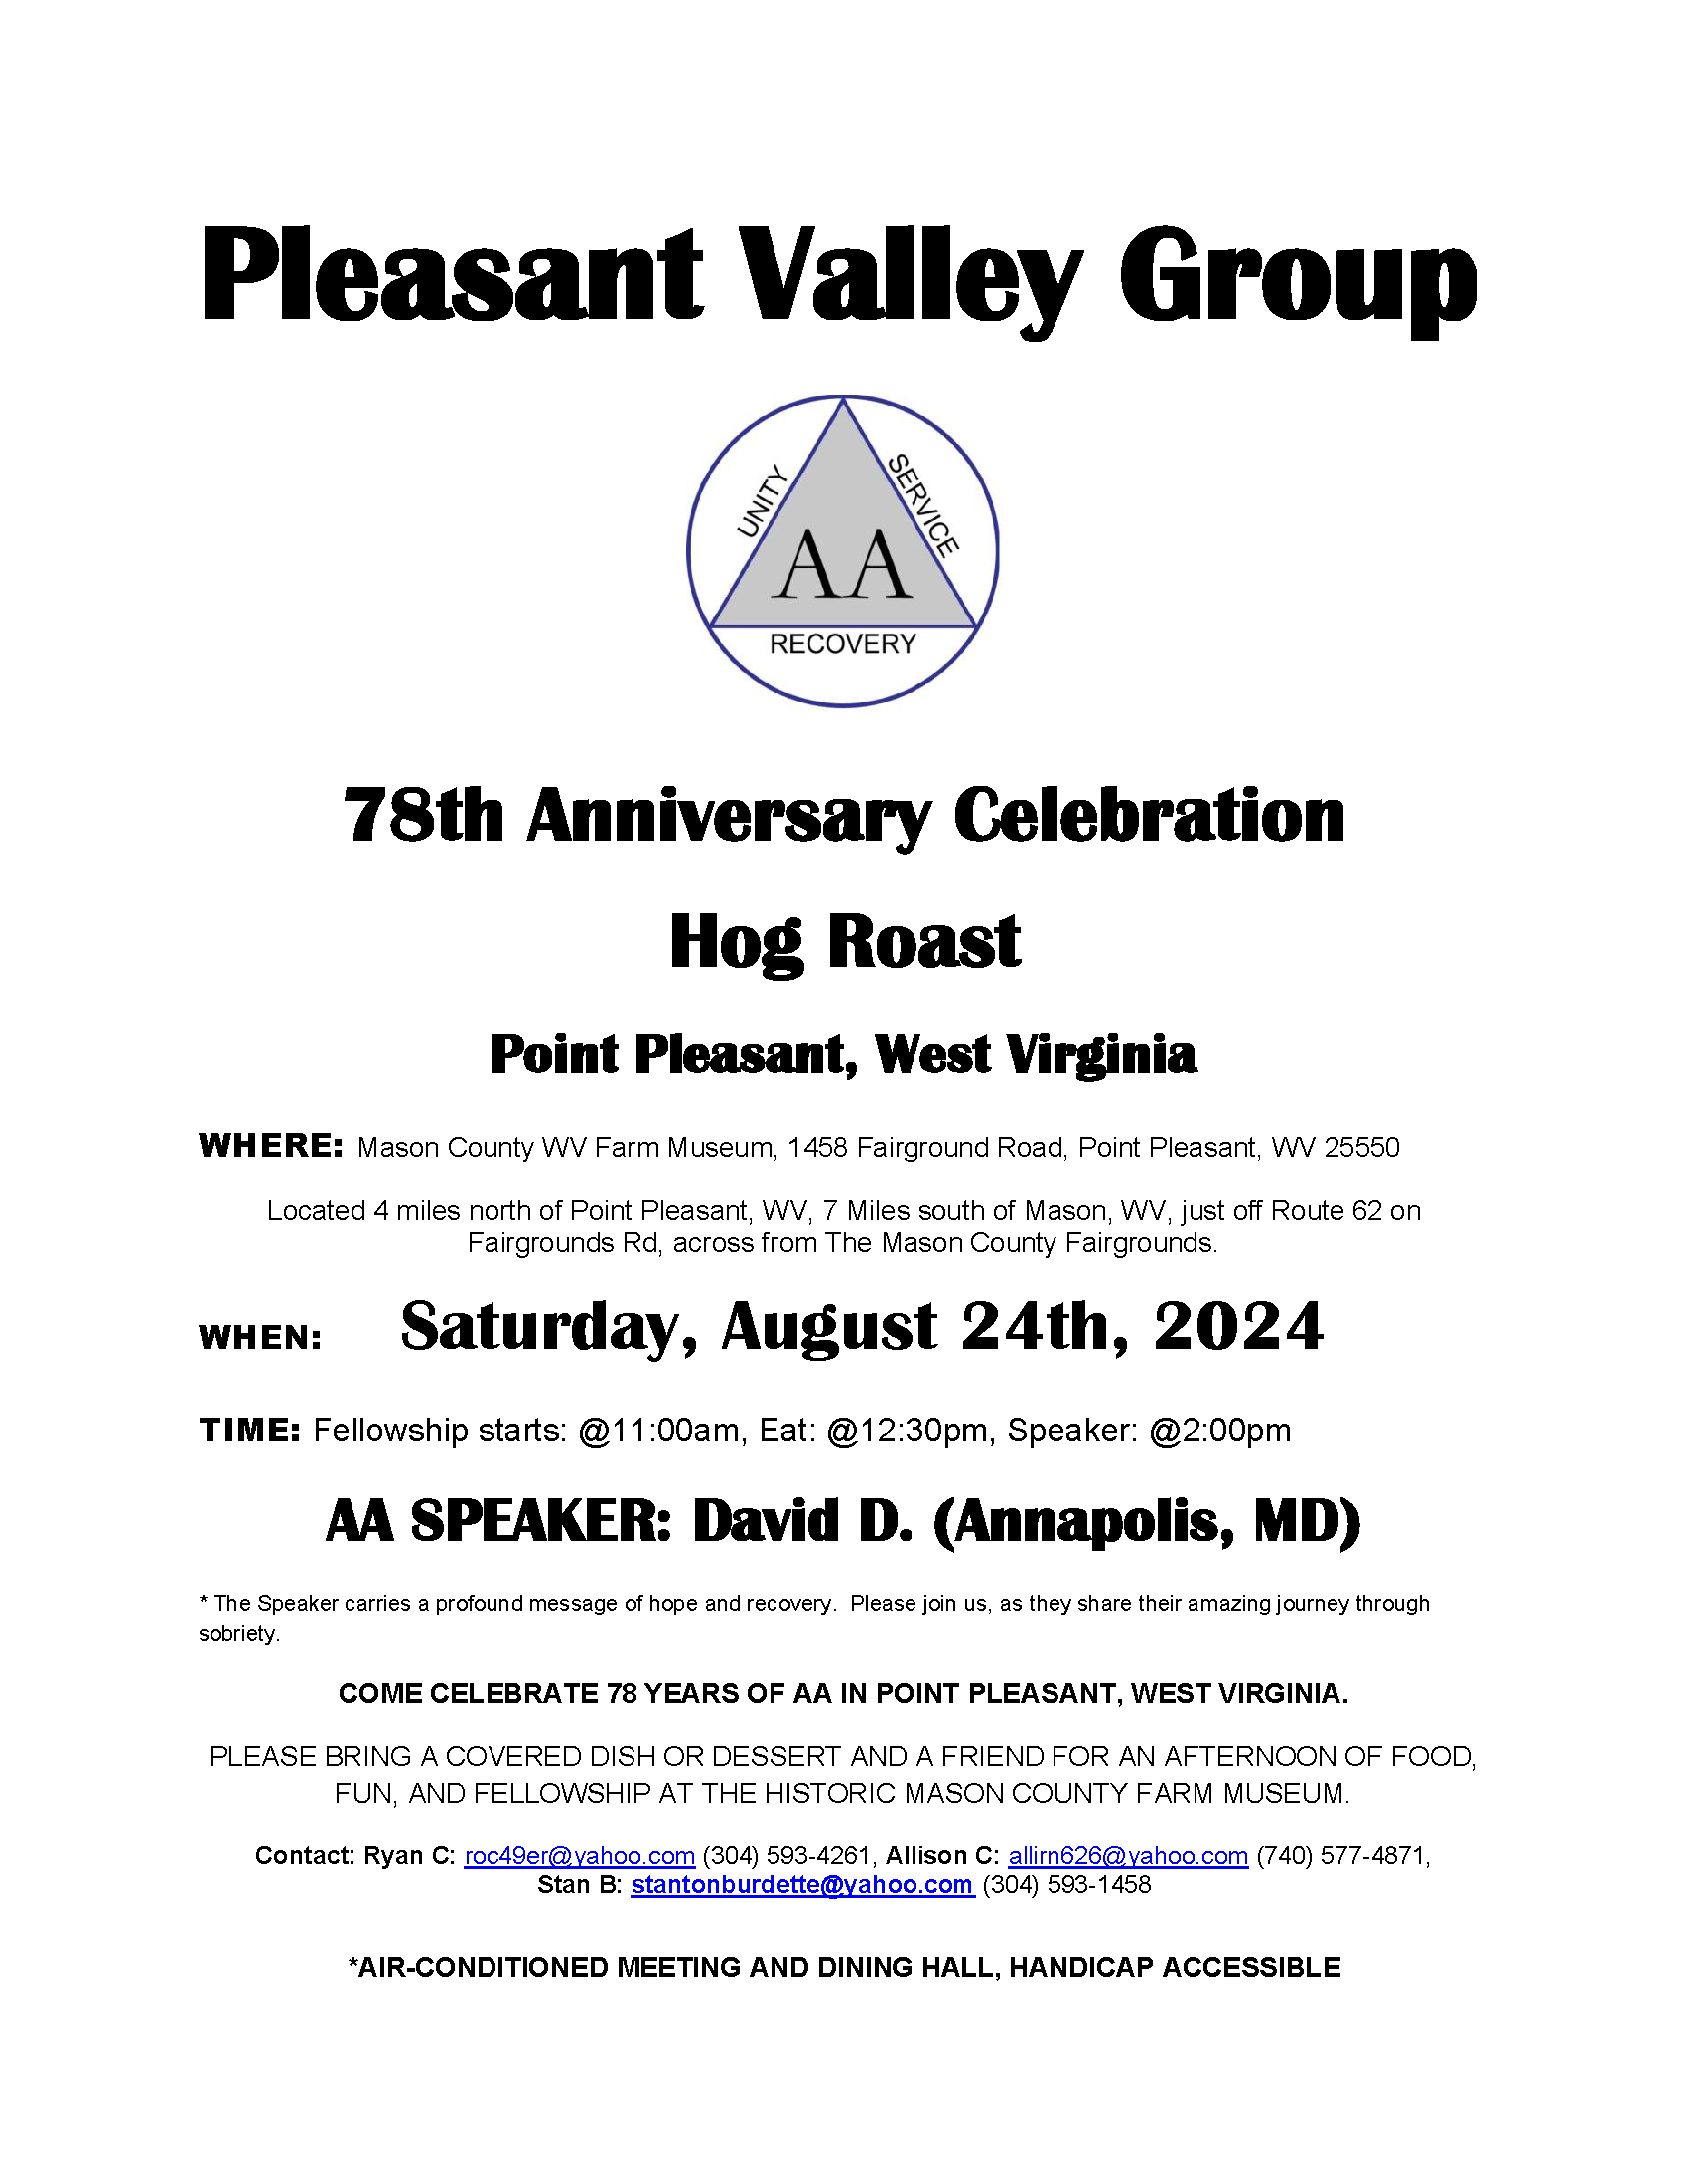 Pleasant Valley Group Hog Roast Flyer 2024